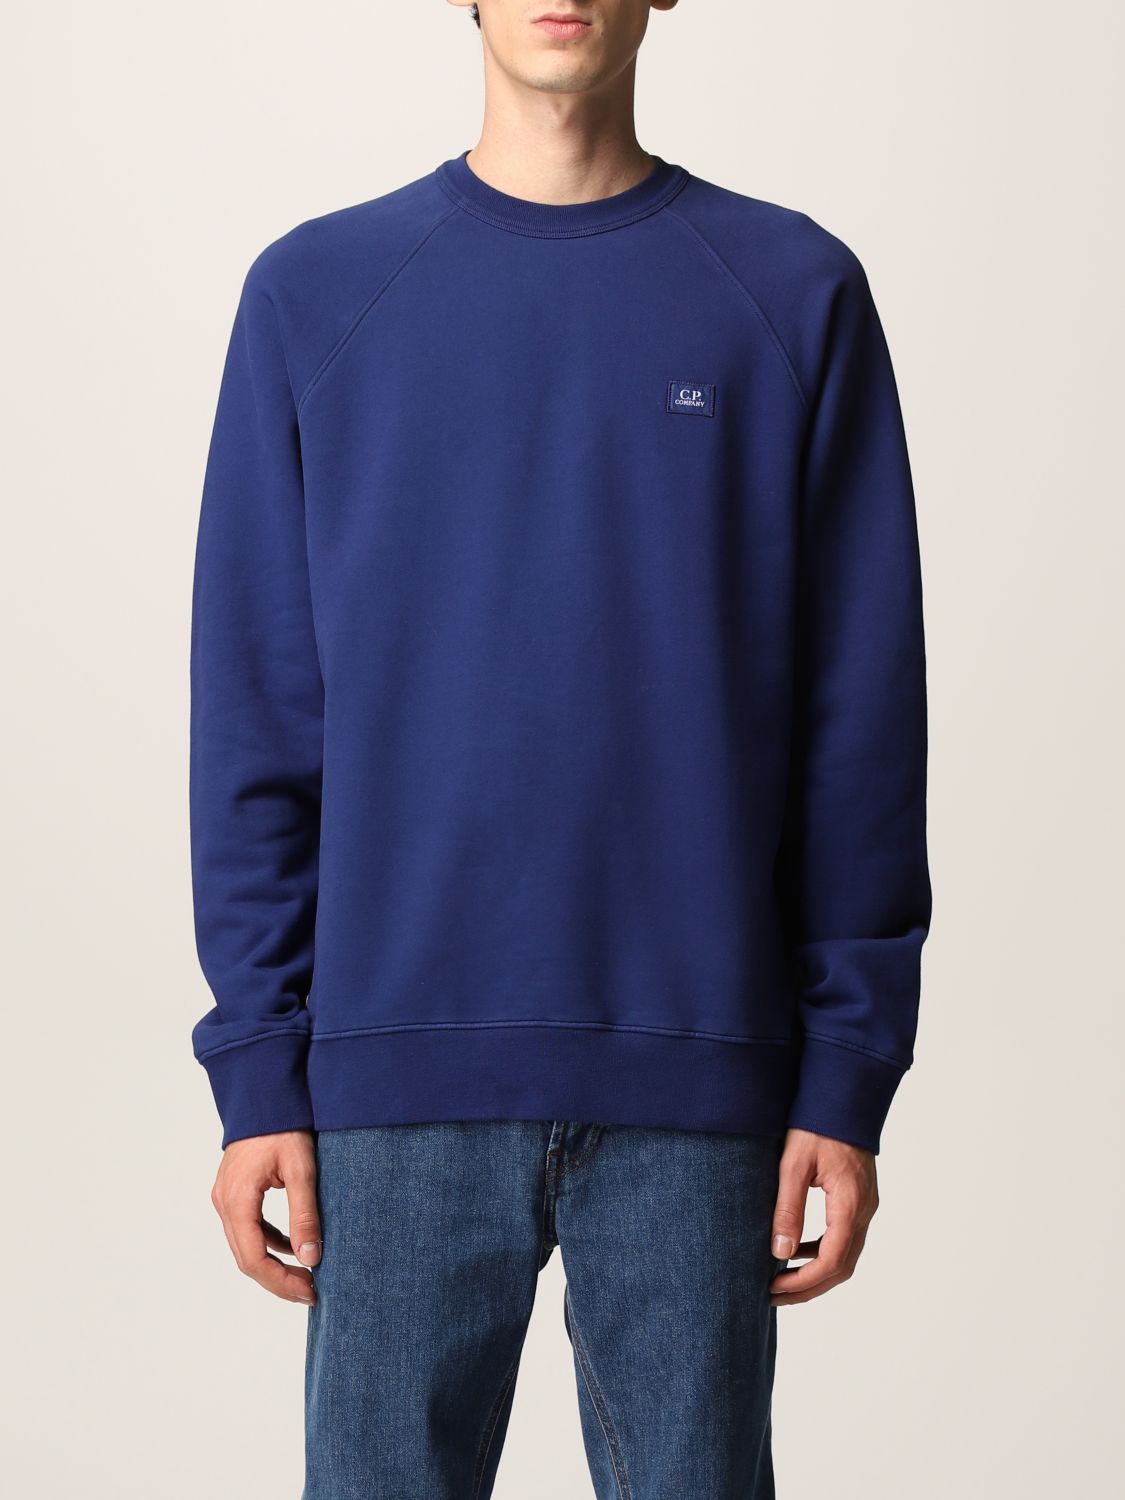 C.P. COMPANY: sweatshirt for man - Blue | C.p. Company sweatshirt ...